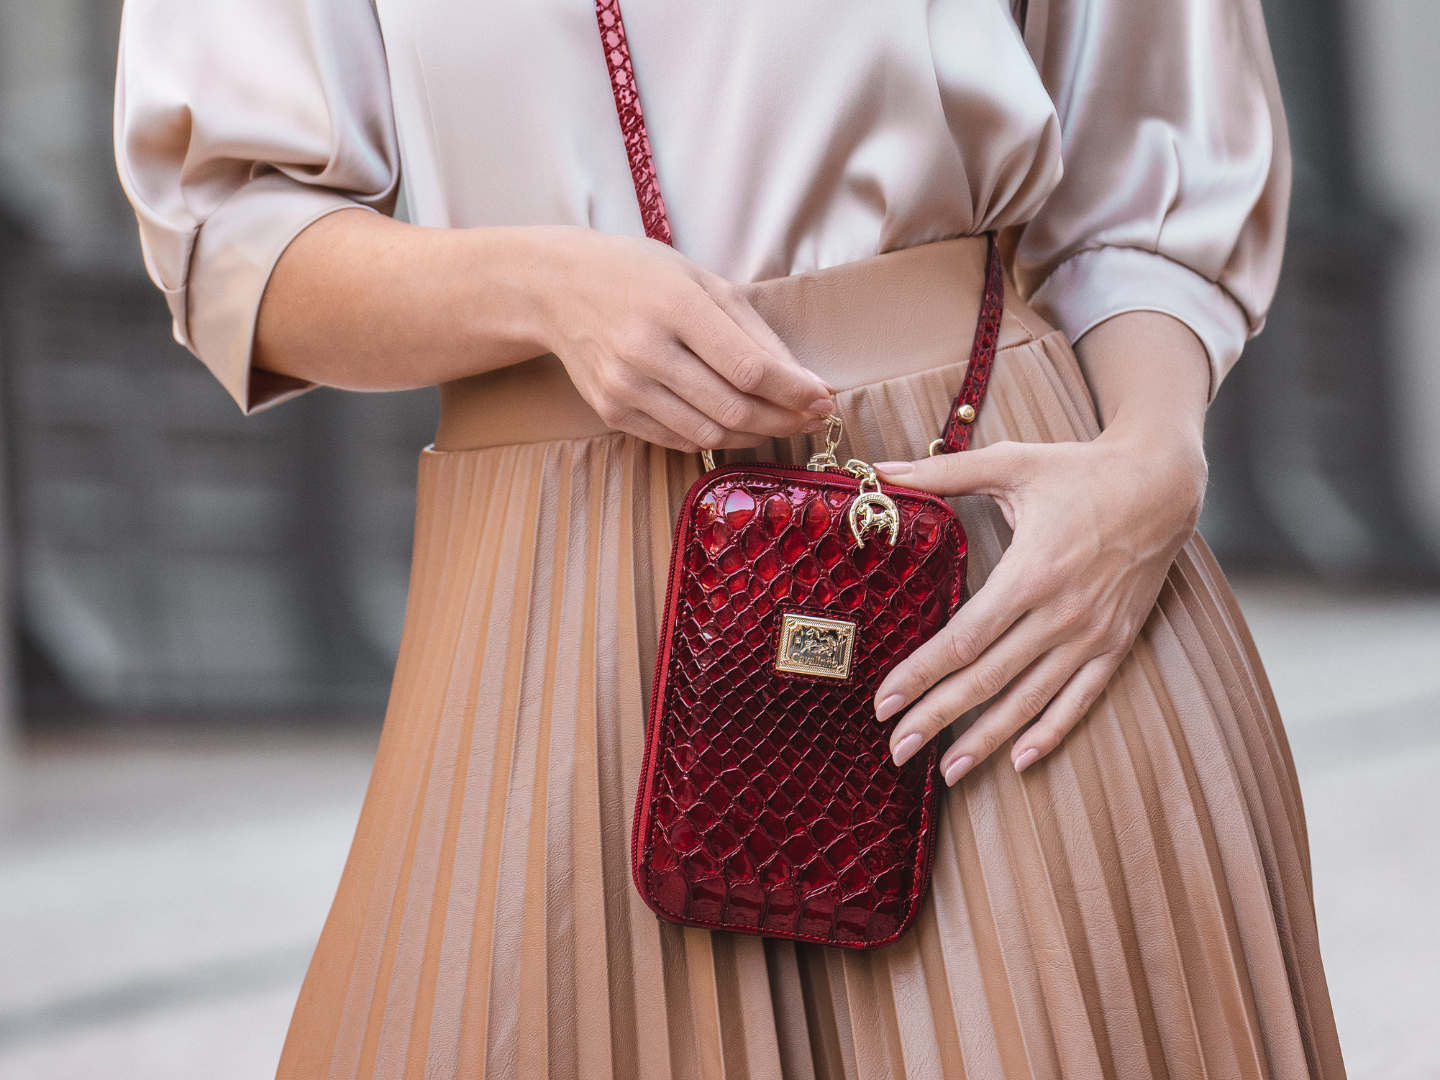 Lilac nylon mobile phone bag with zip · Women's fashion · El Corte Inglés